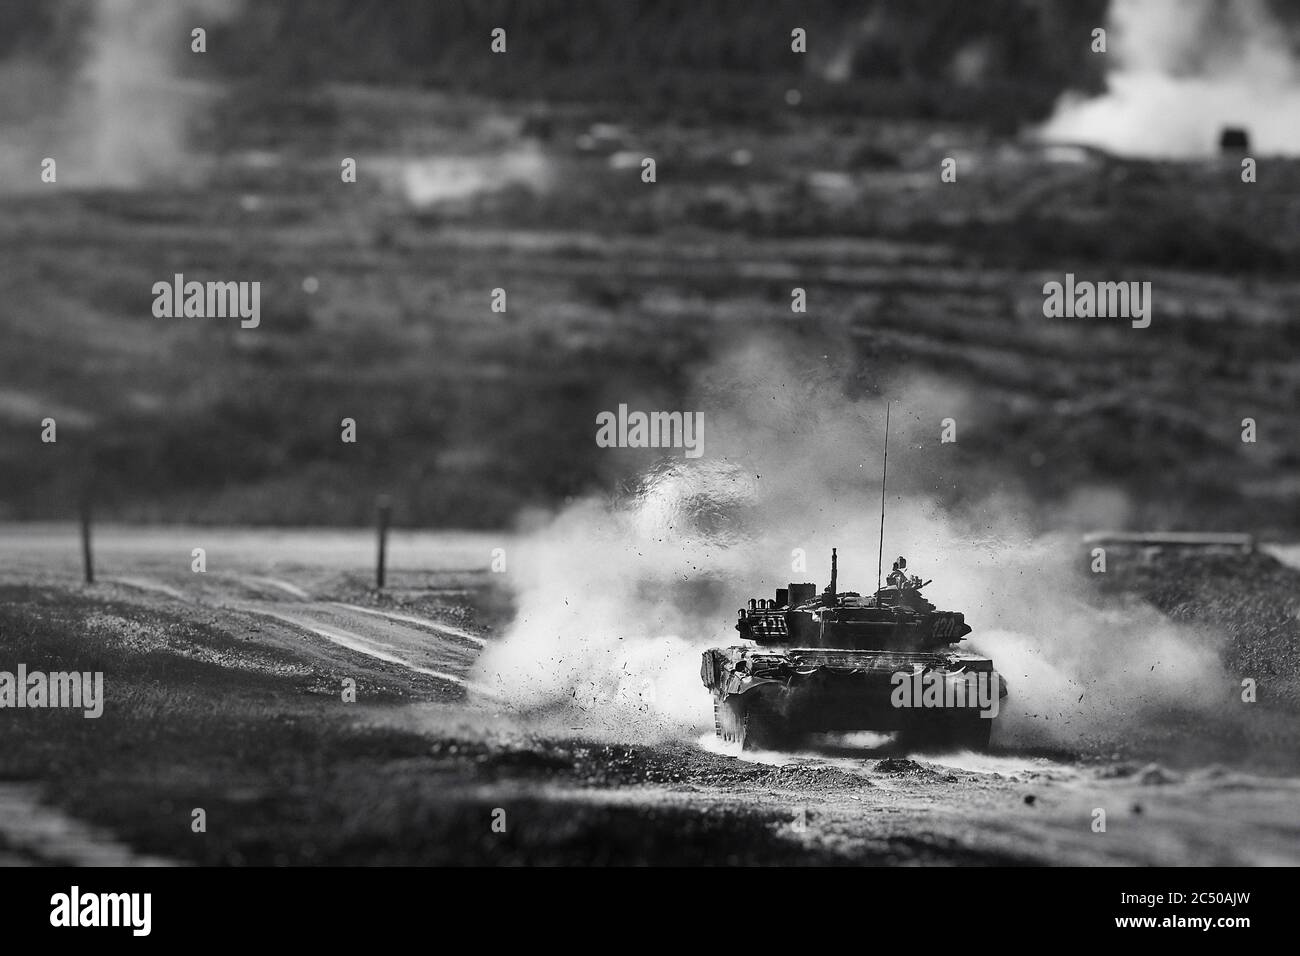 Shot from a tank. Russian tank shot on range. Smoke, explosions, military  Stock Photo - Alamy